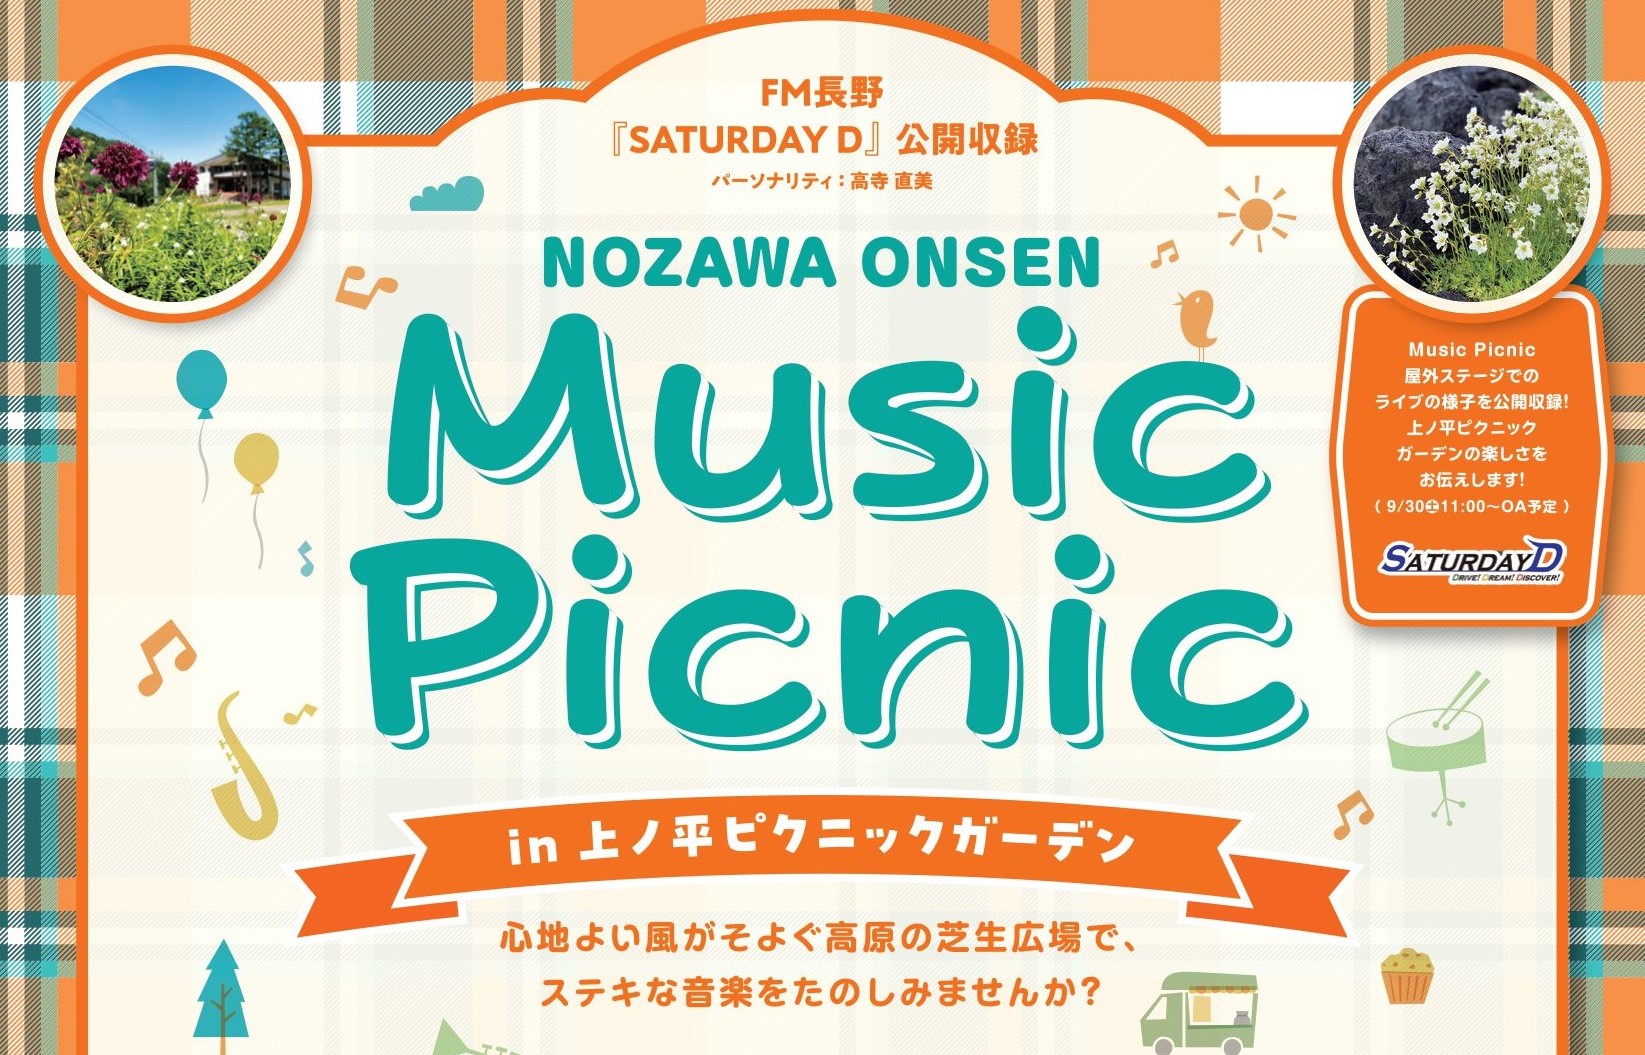 9/17 NOZAWAONSEN Music Picnic 開催！